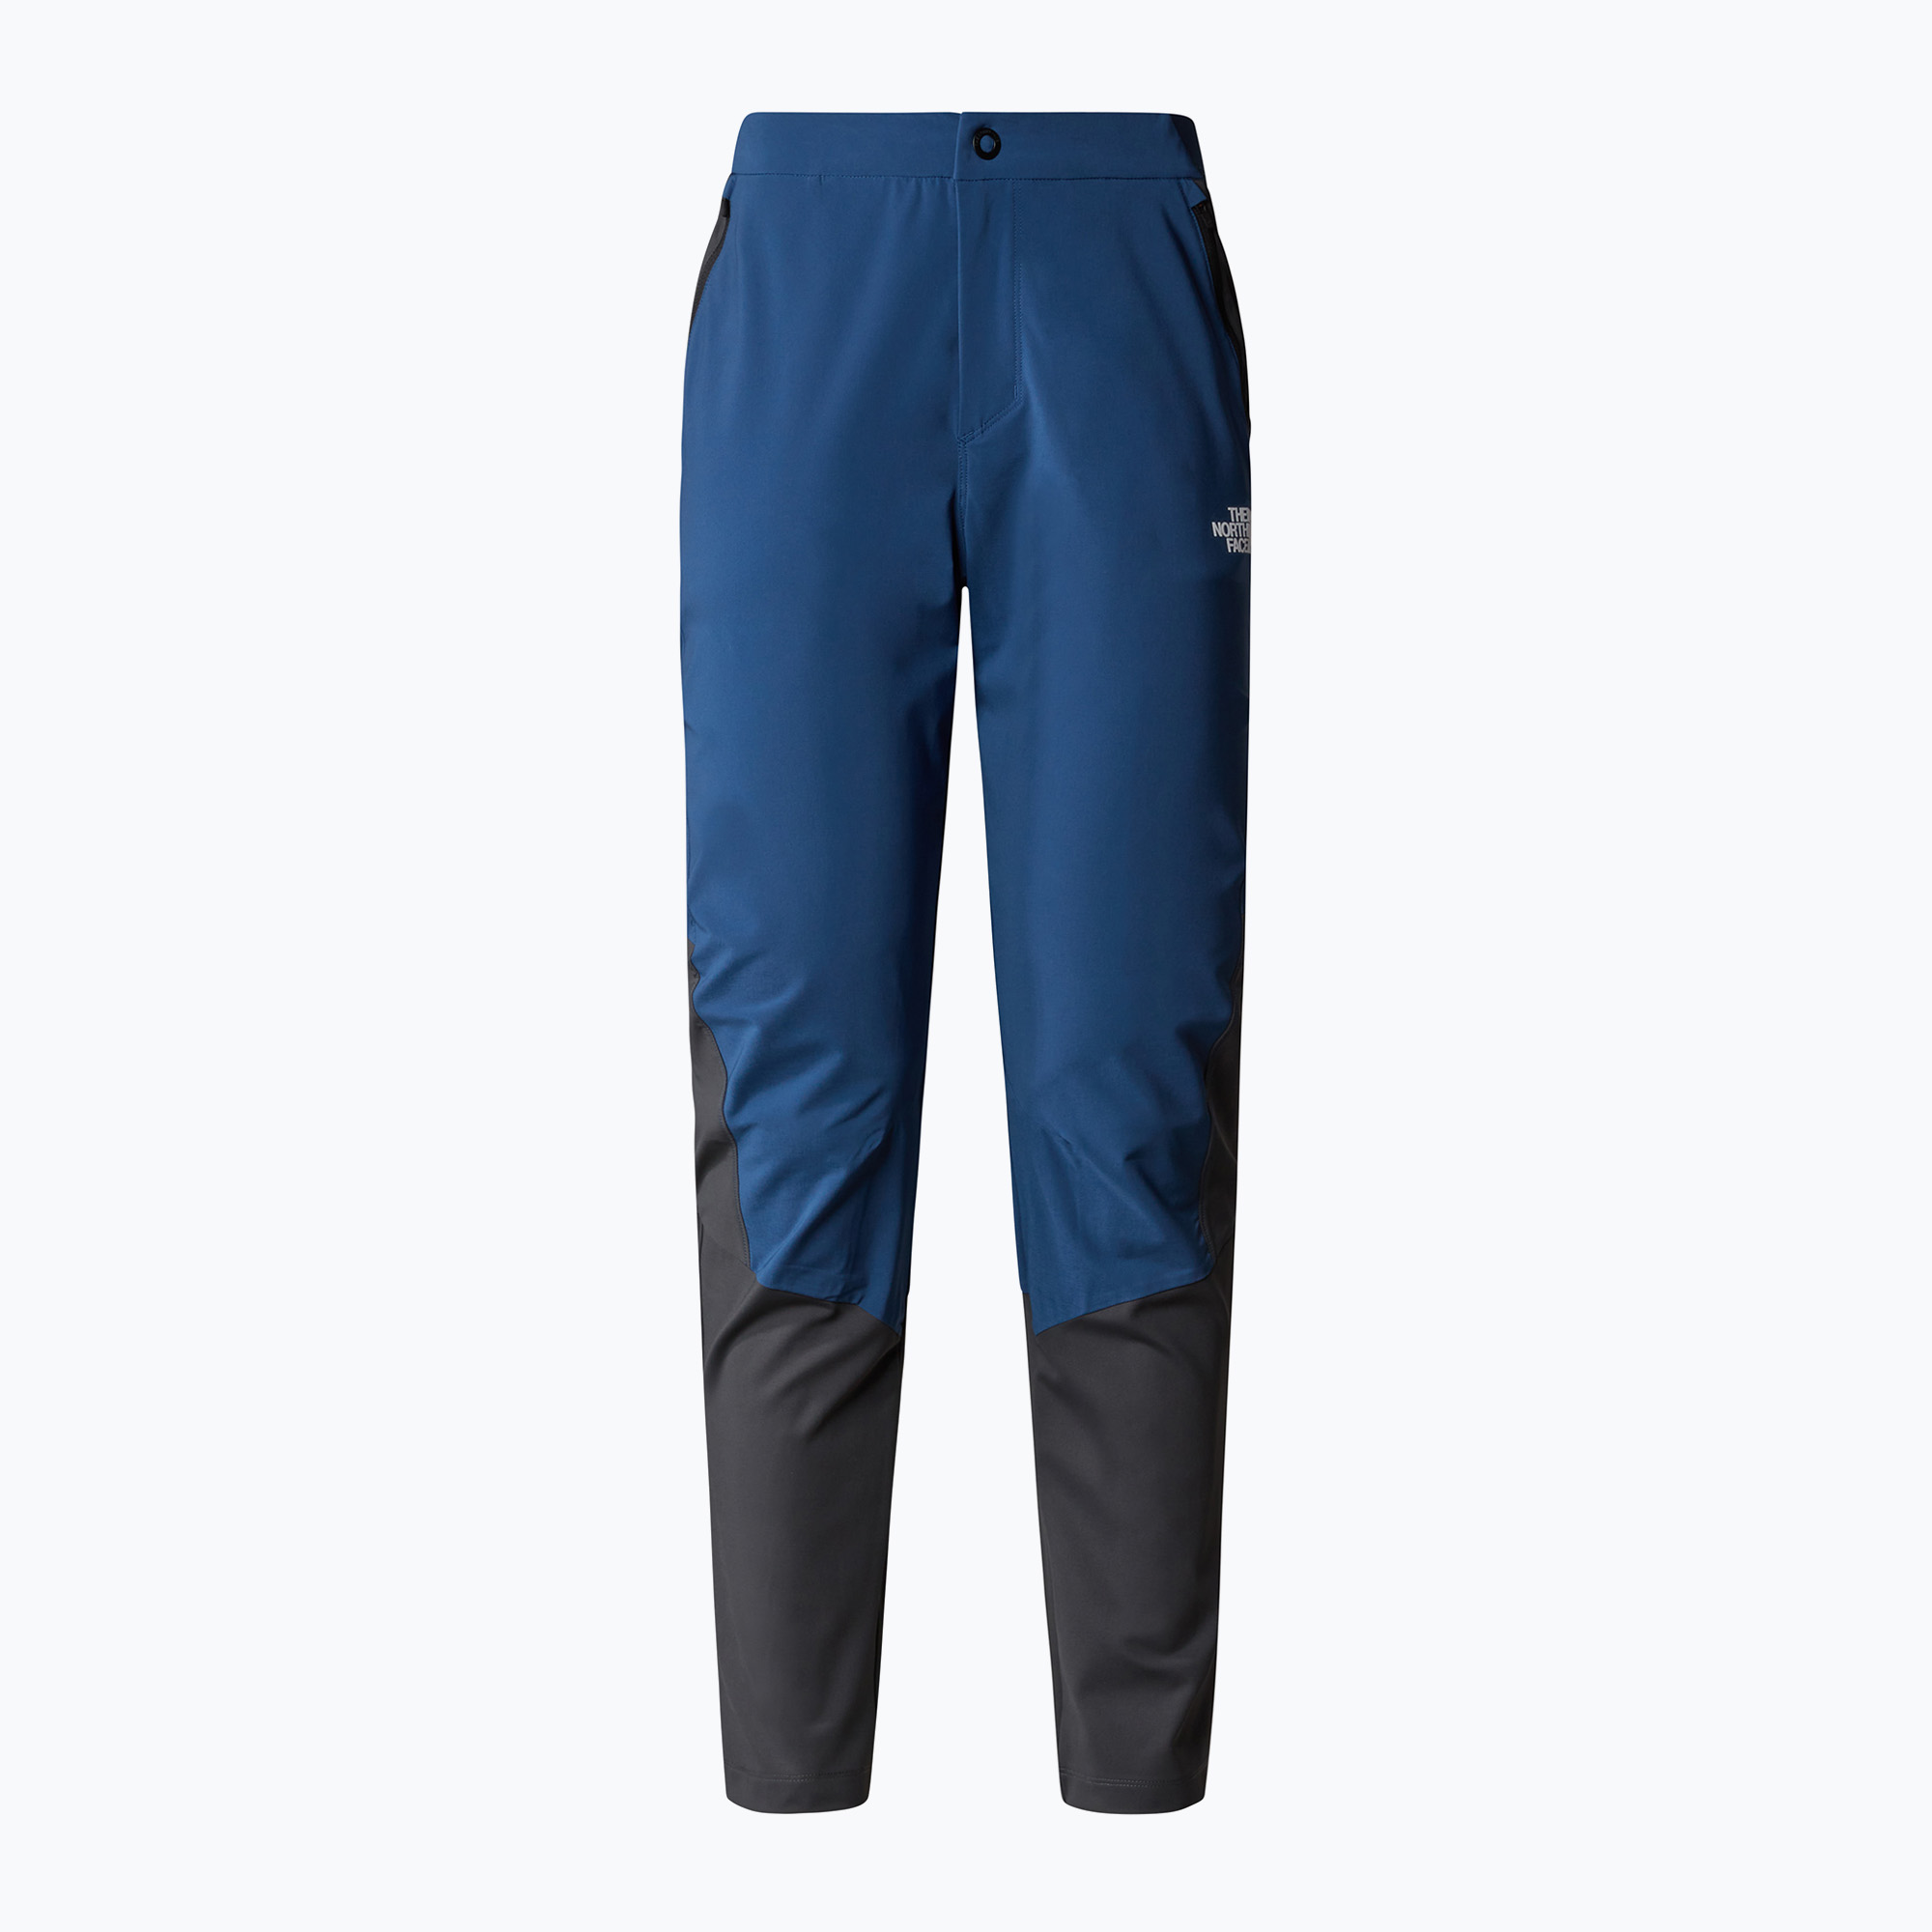 Дамски панталони за трекинг The North Face Felik Slim Tapered shady blue/asphalt grey